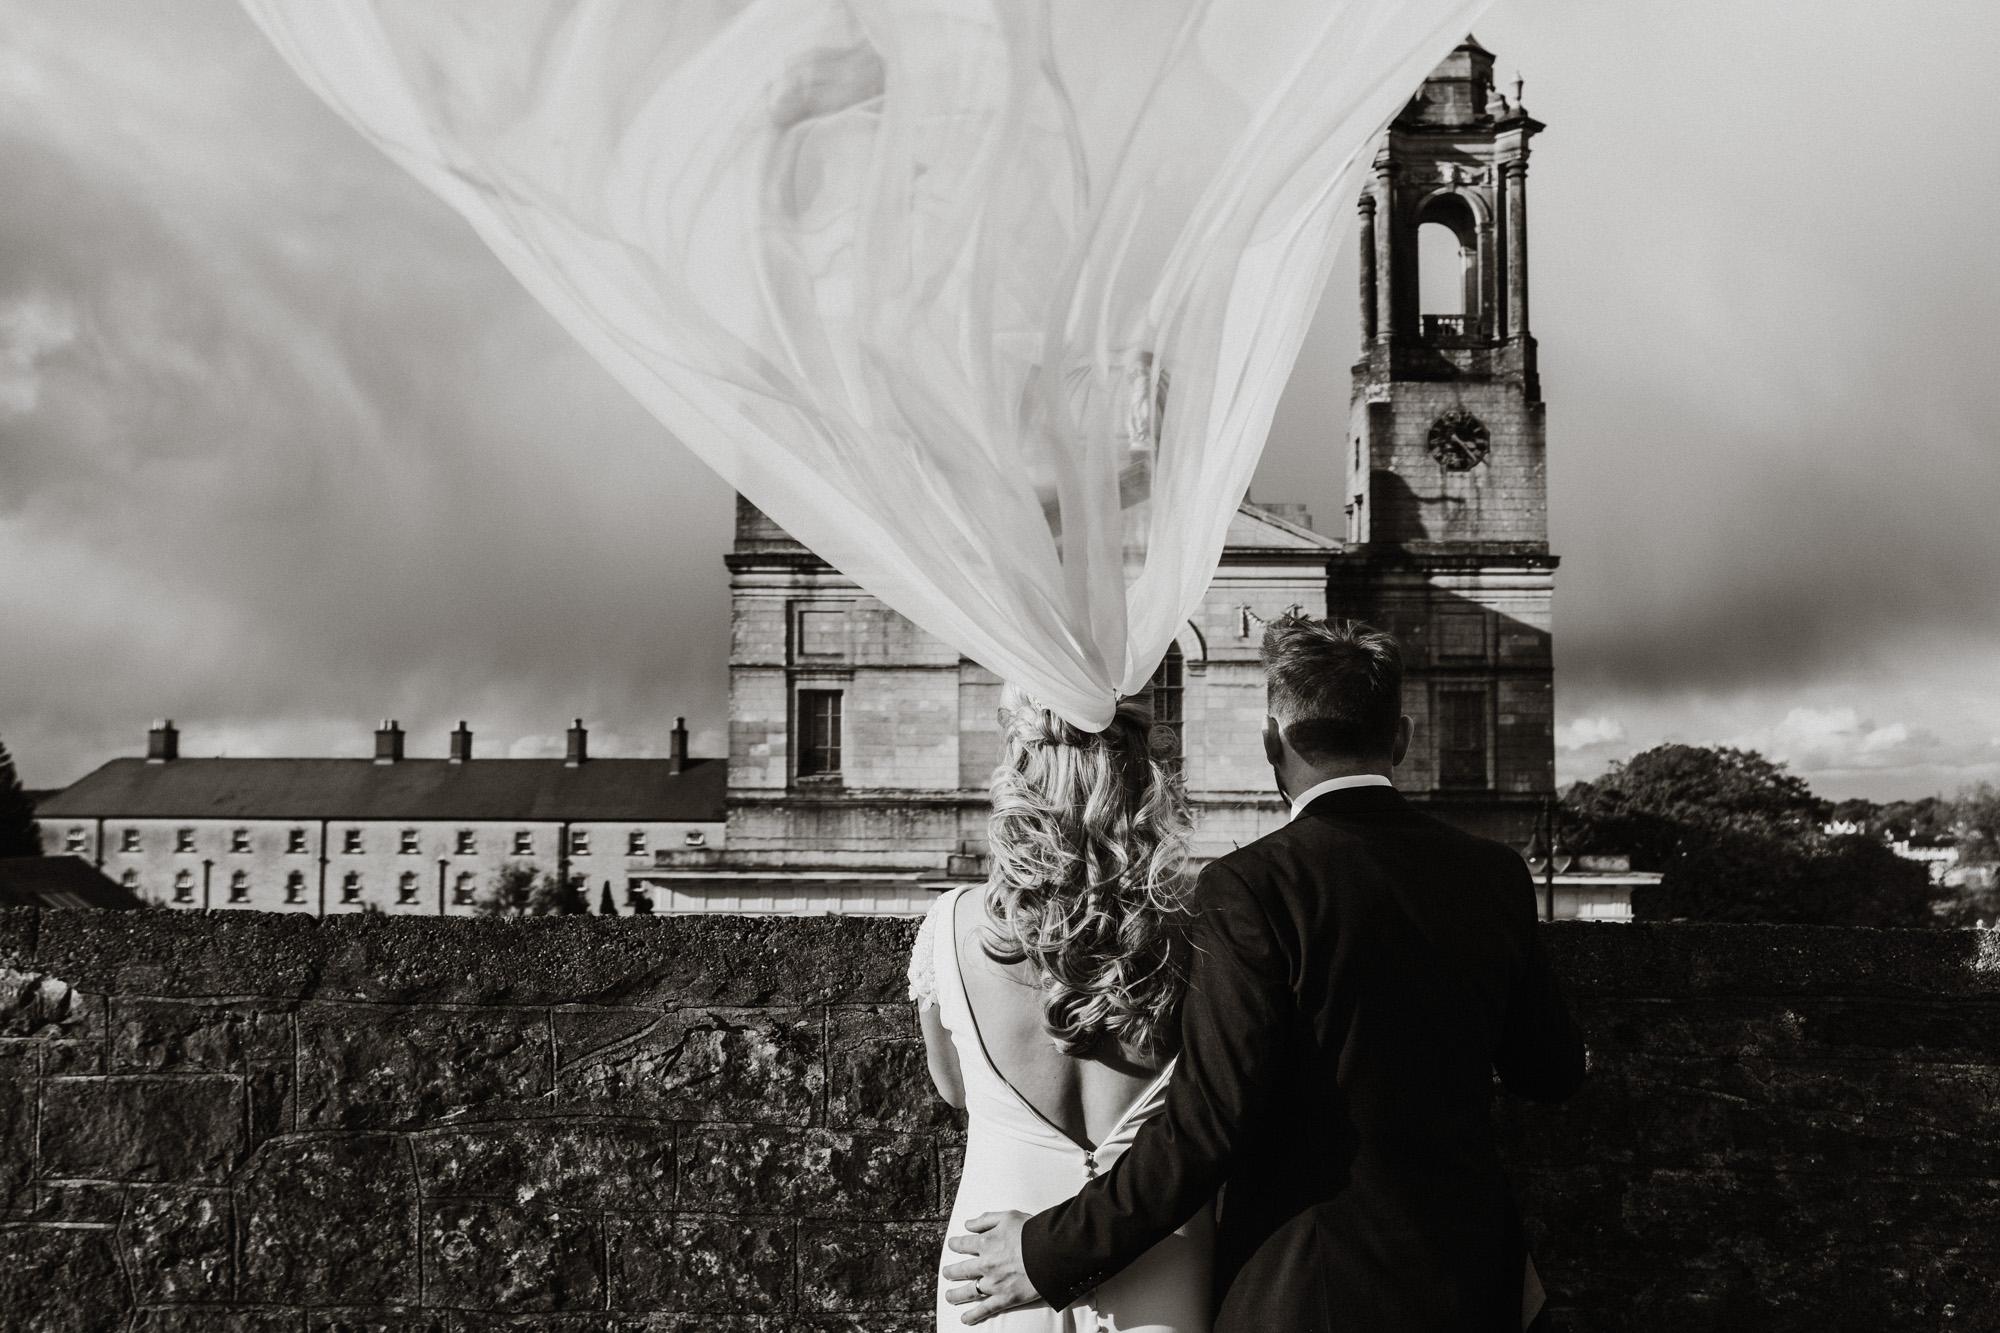 athlone-wedding-athlone-castle-bridal-party